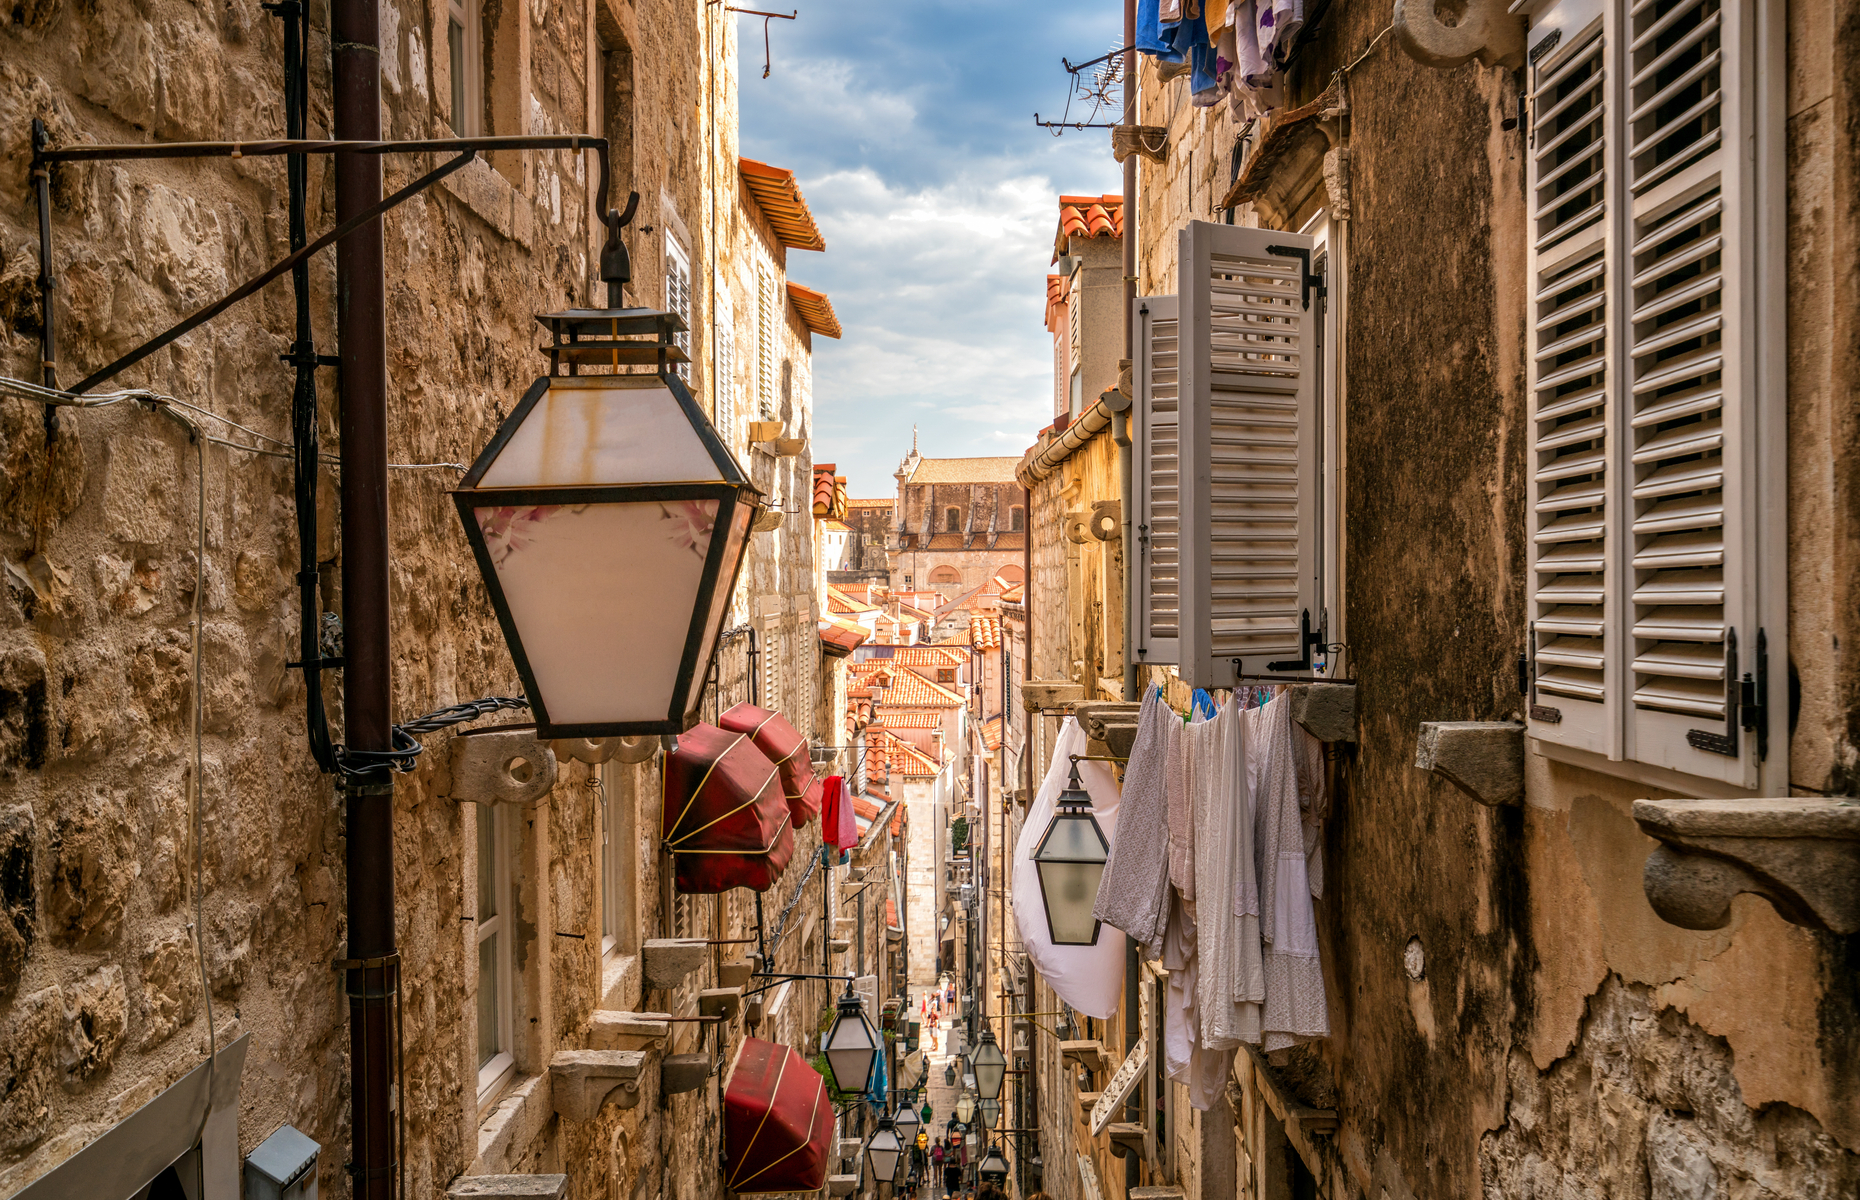 Lanes in Dubrovnik (Image: Blue Planet Studio/Shutterstock)